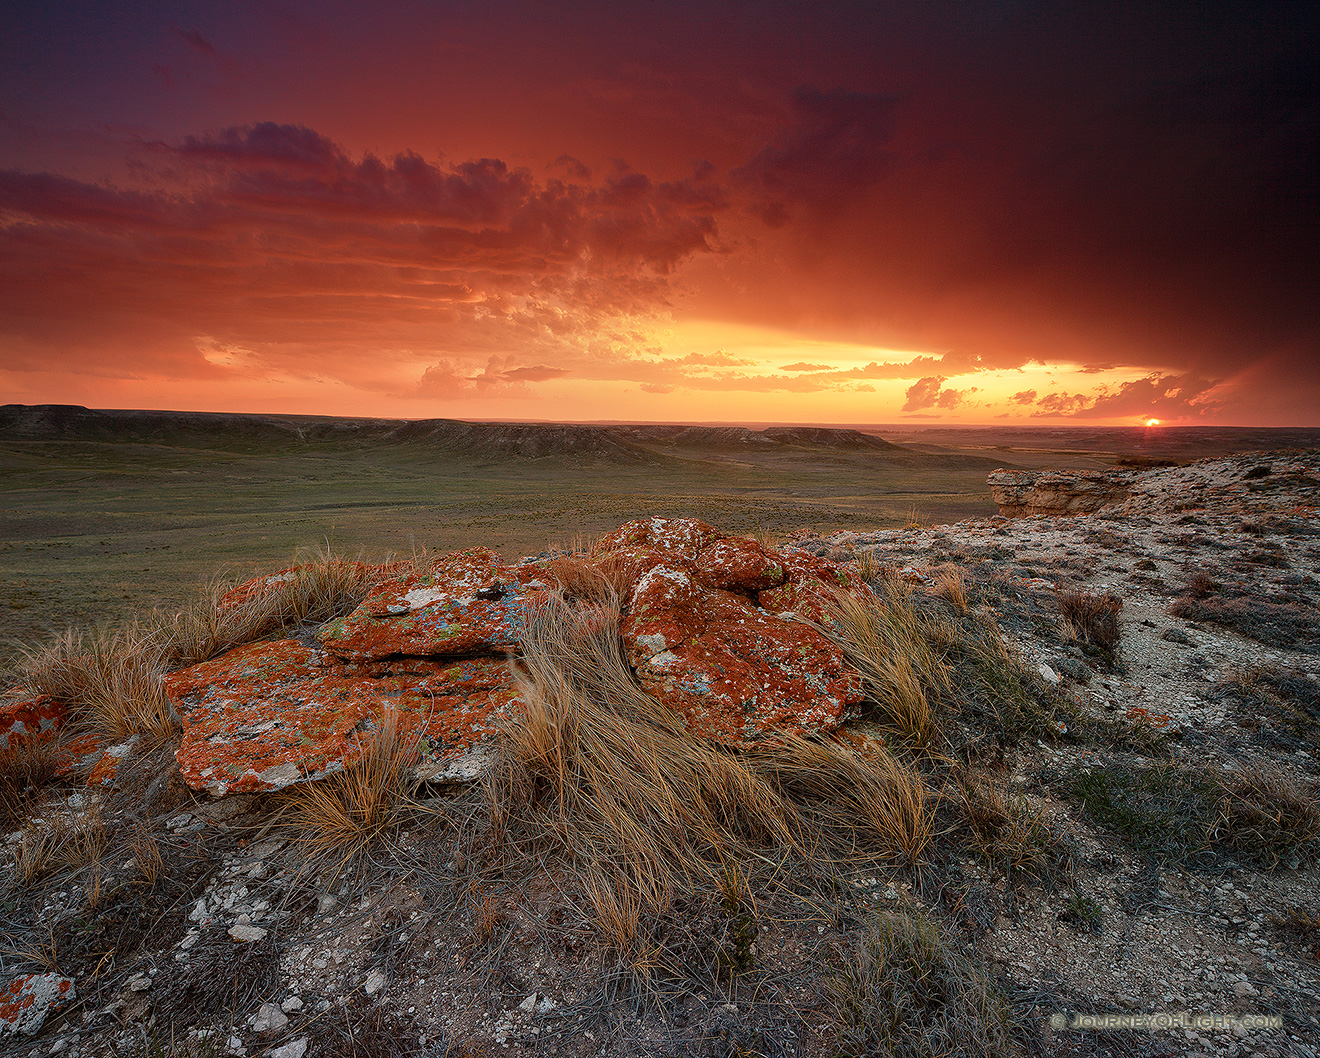 Sunset at Agate Fossil Beds National Monument in western Nebraska after an intense summer storm. - Nebraska Picture